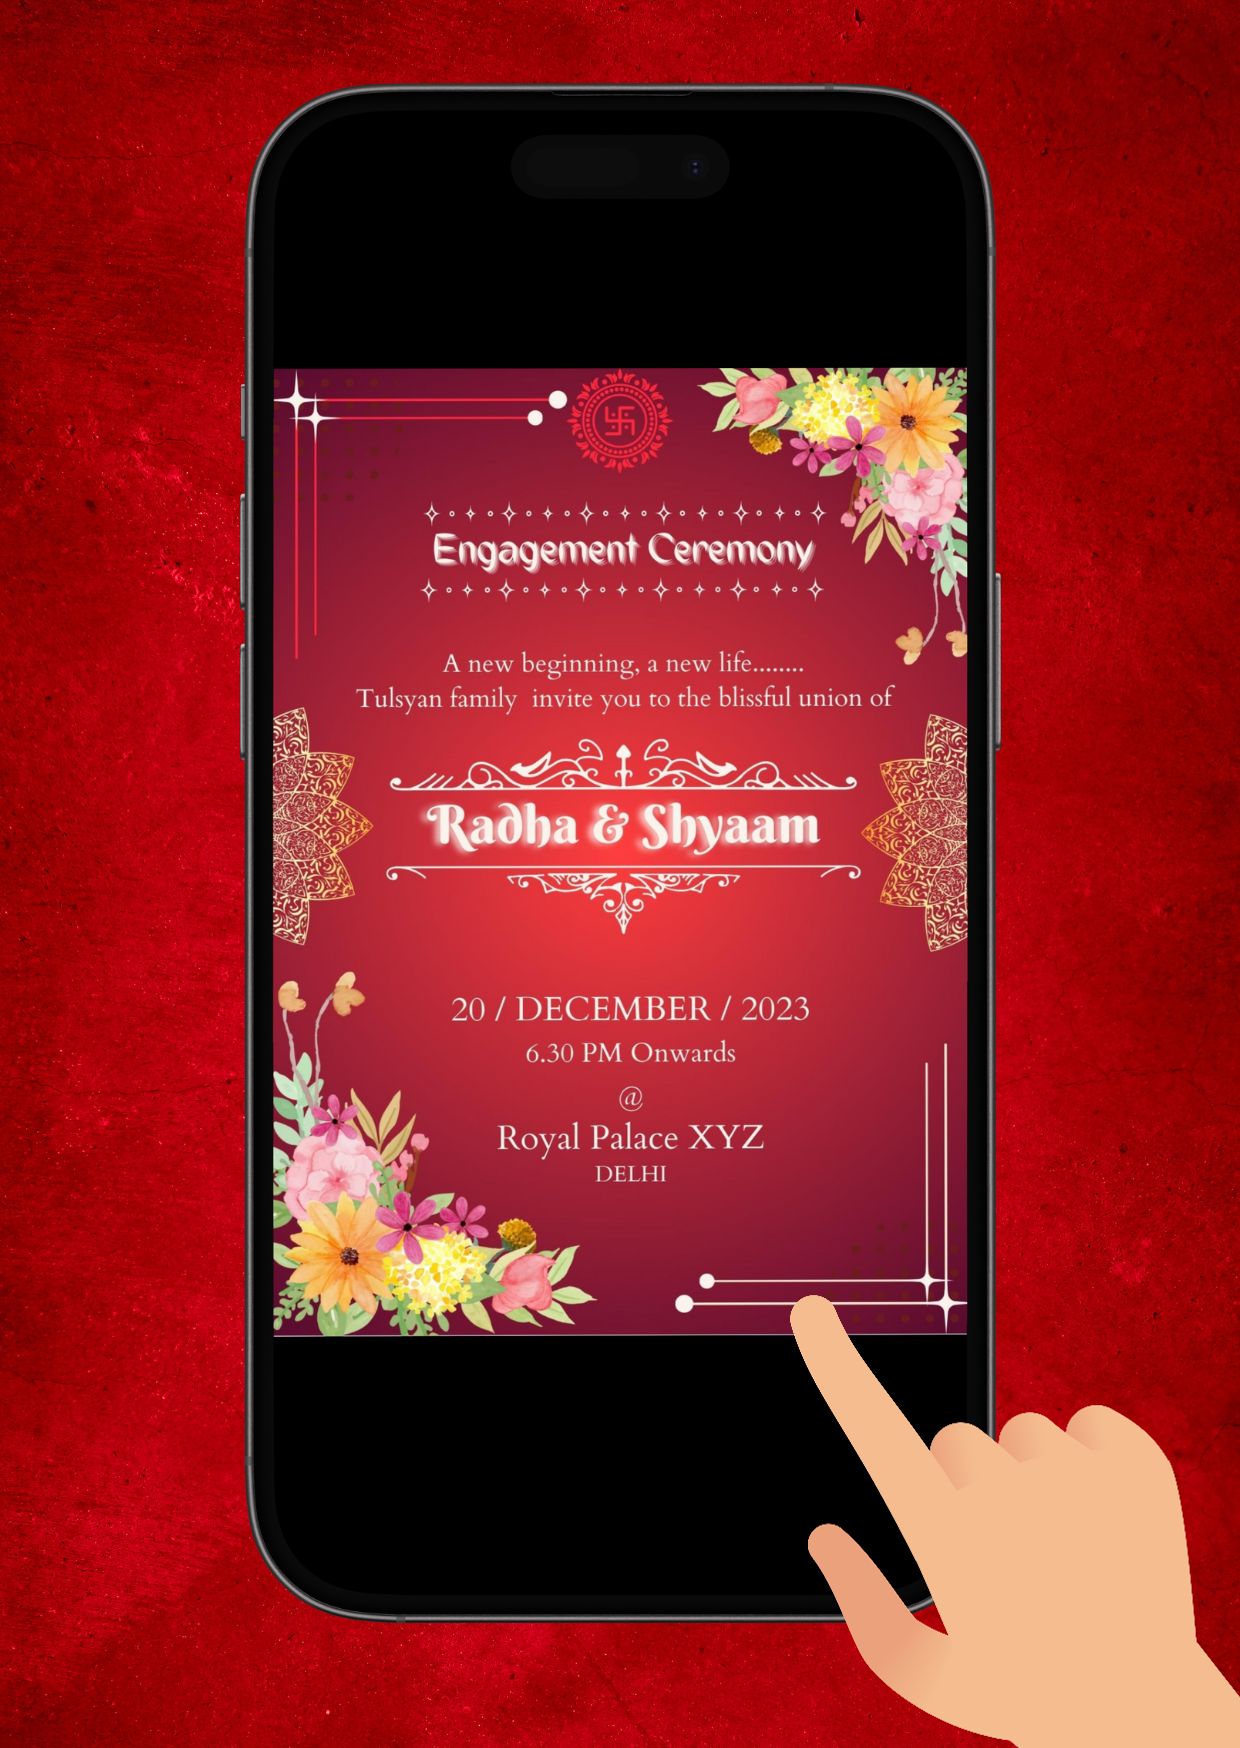 Engagement ceremony invitation mobile view